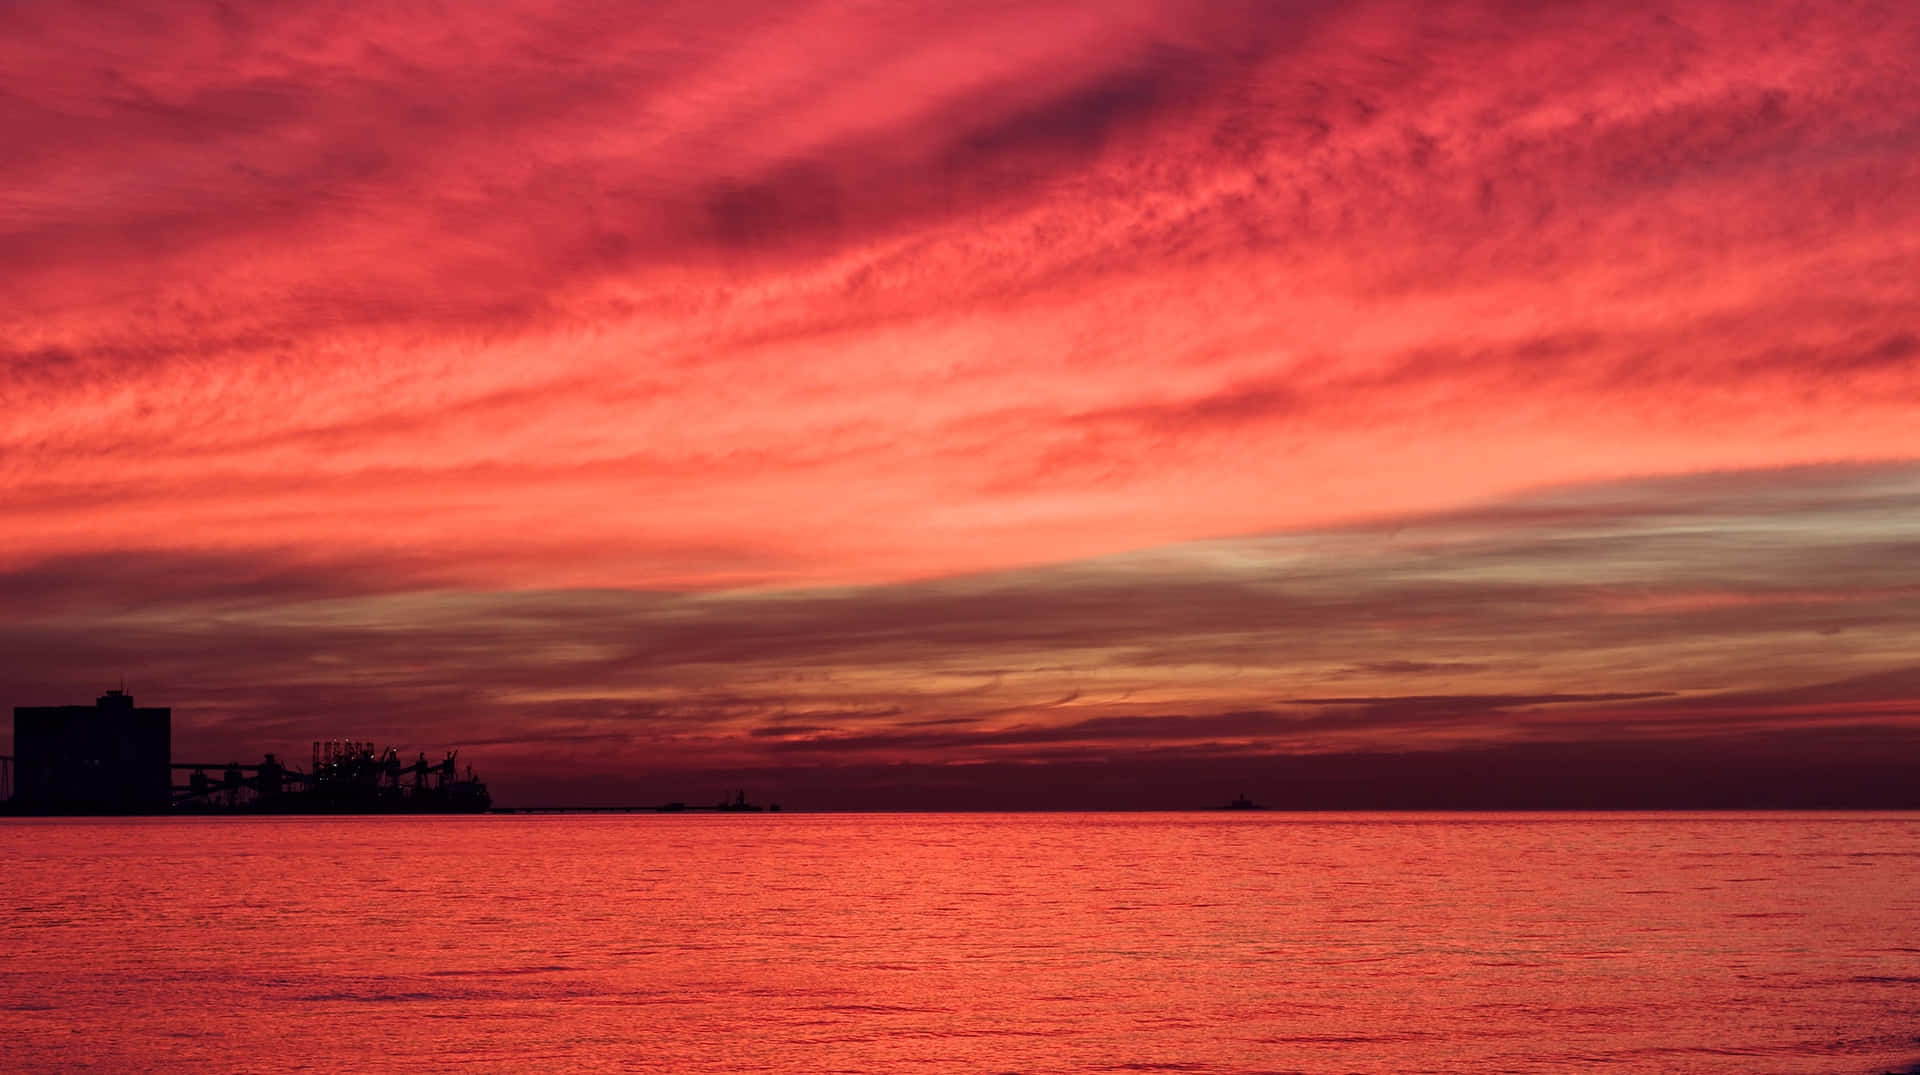 Stunning Red Sunset Scenery Wallpaper